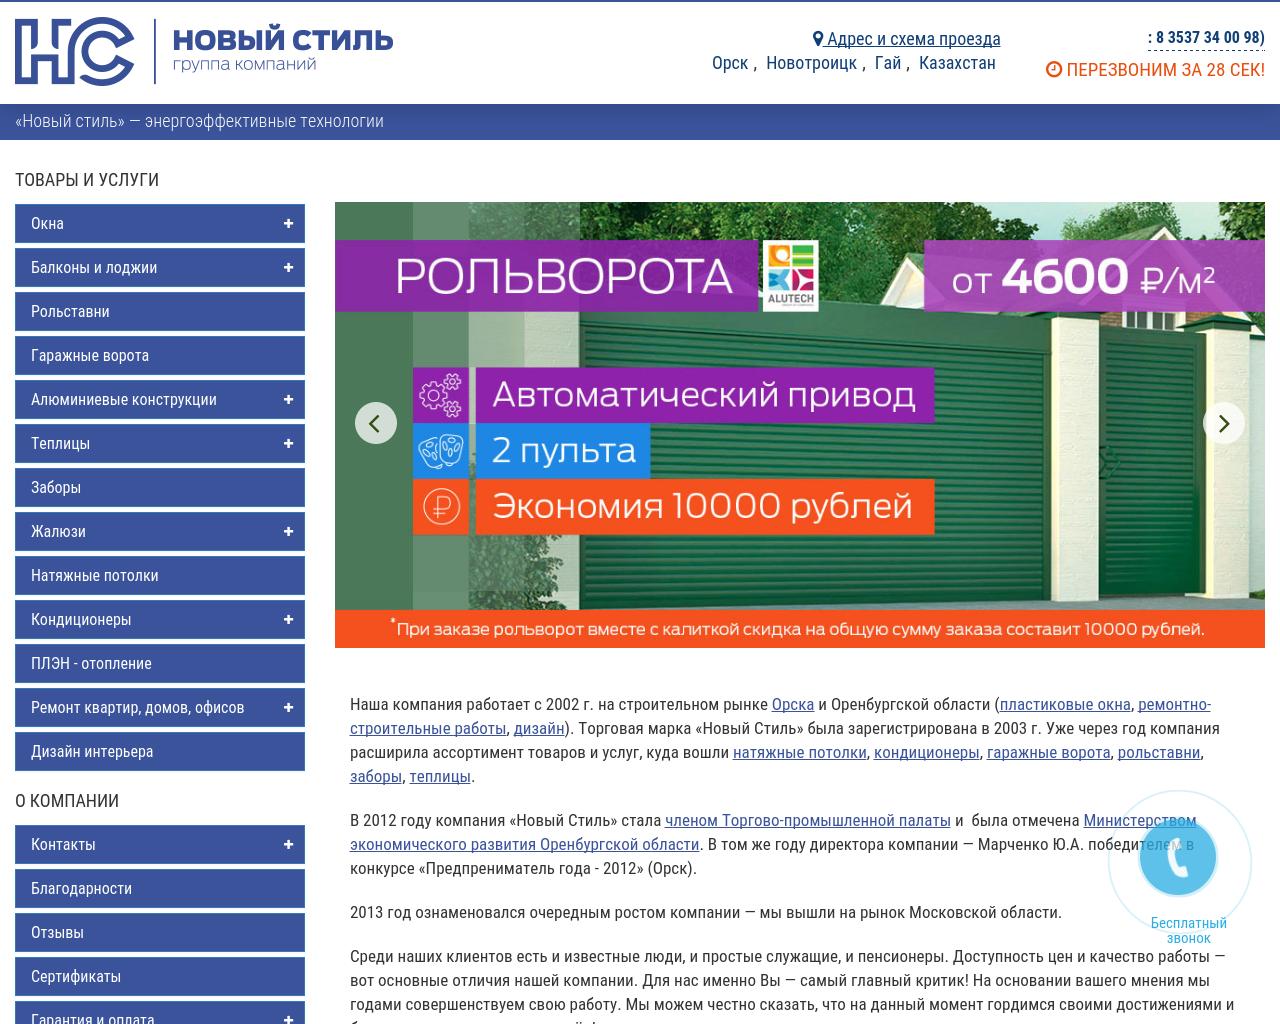 Изображение сайта newstyle-orsk.ru в разрешении 1280x1024